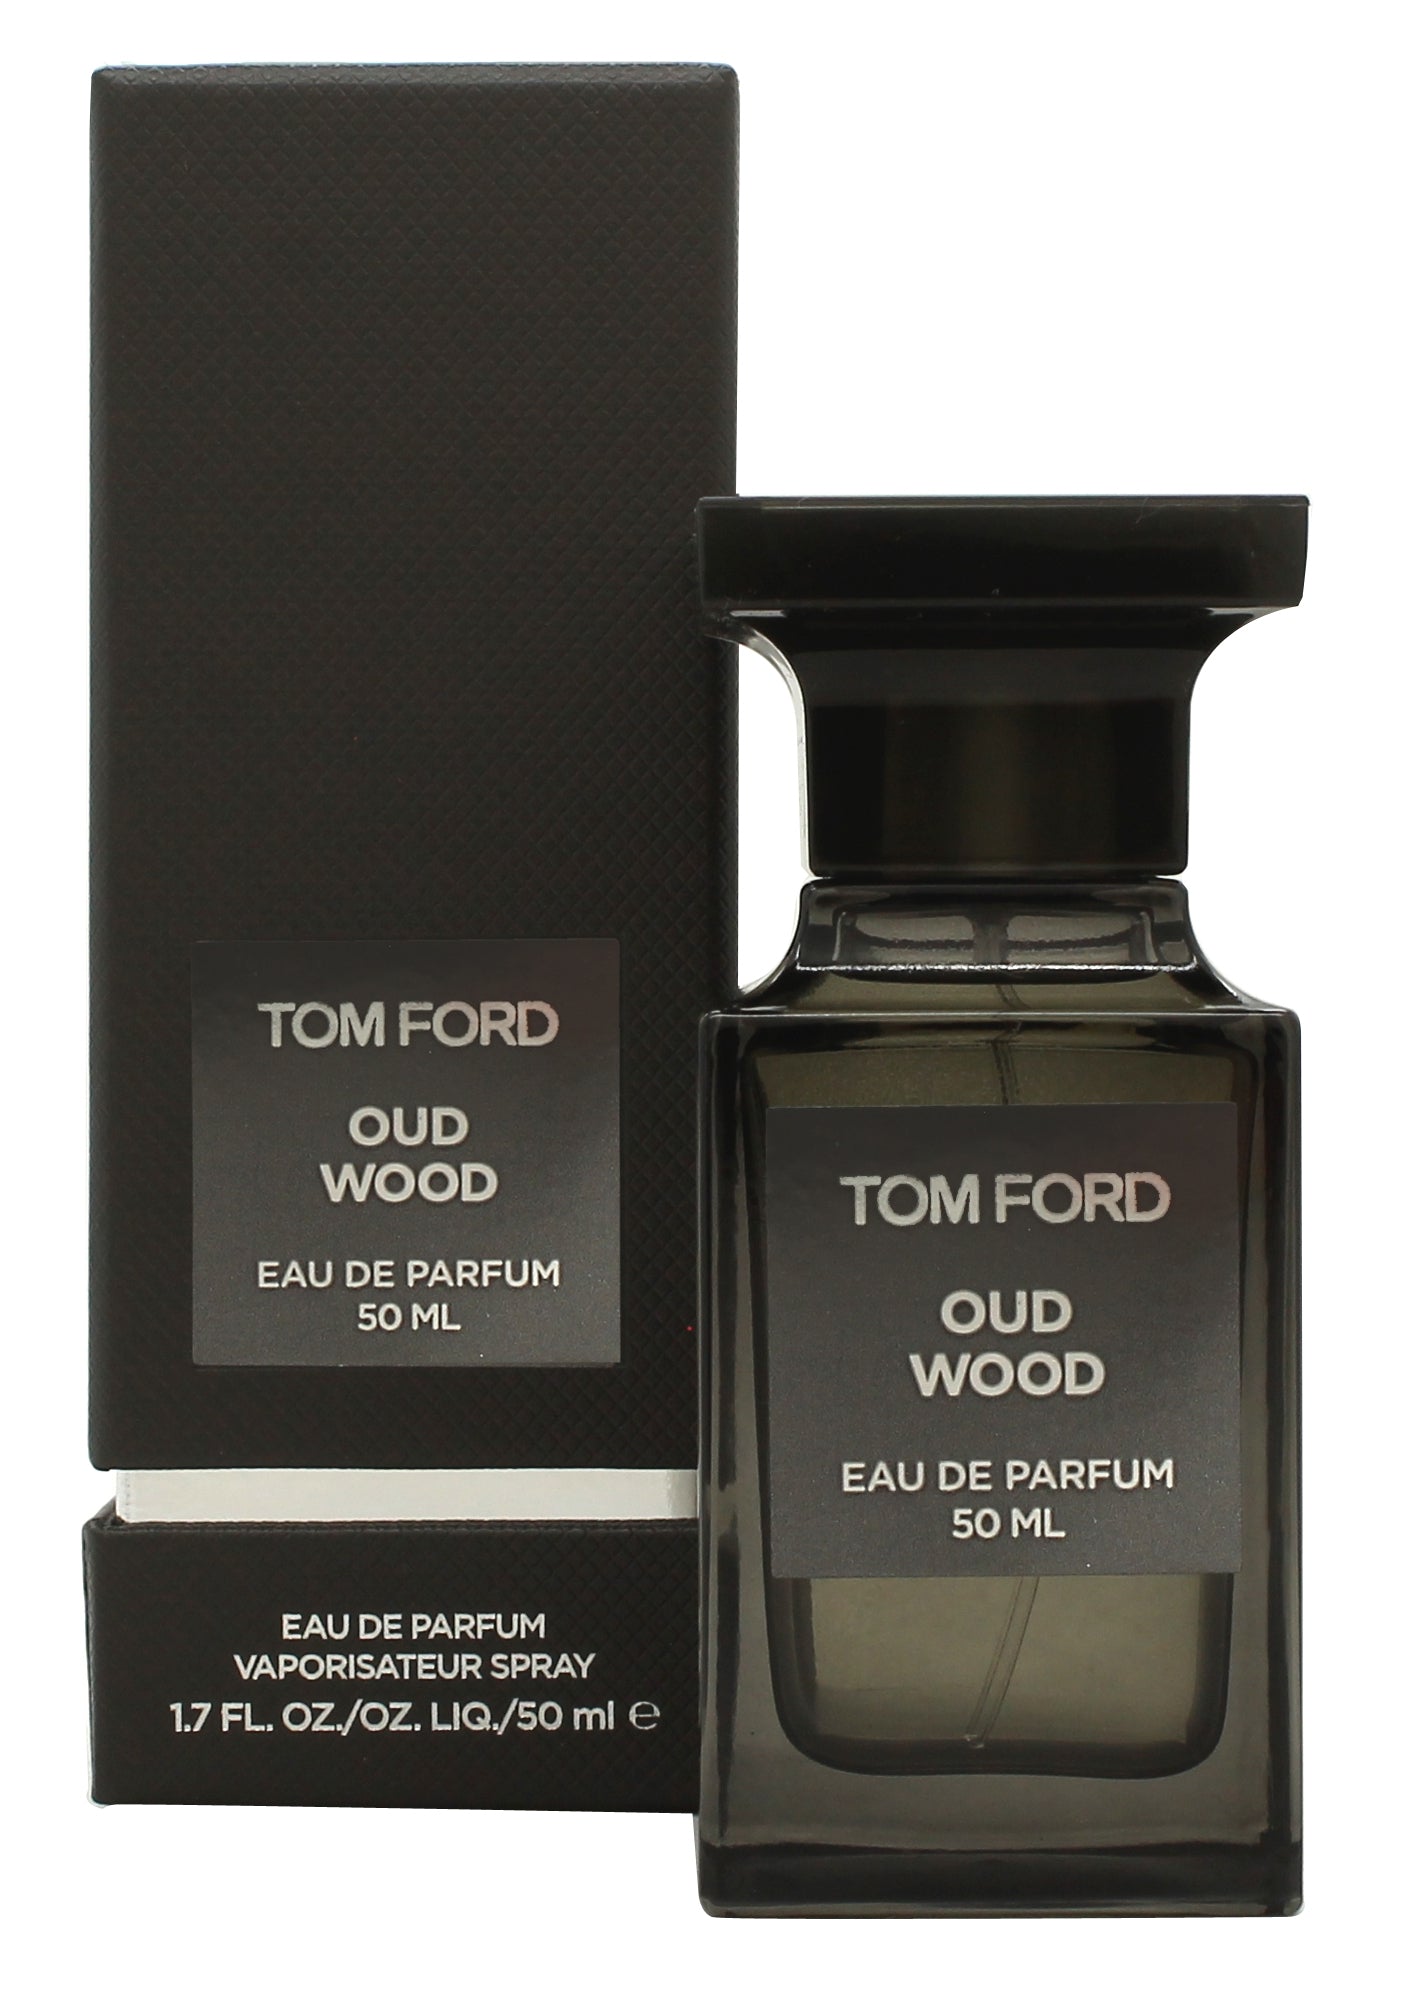 View Tom Ford Private Blend Oud Wood Eau de Parfum 50ml Spray information